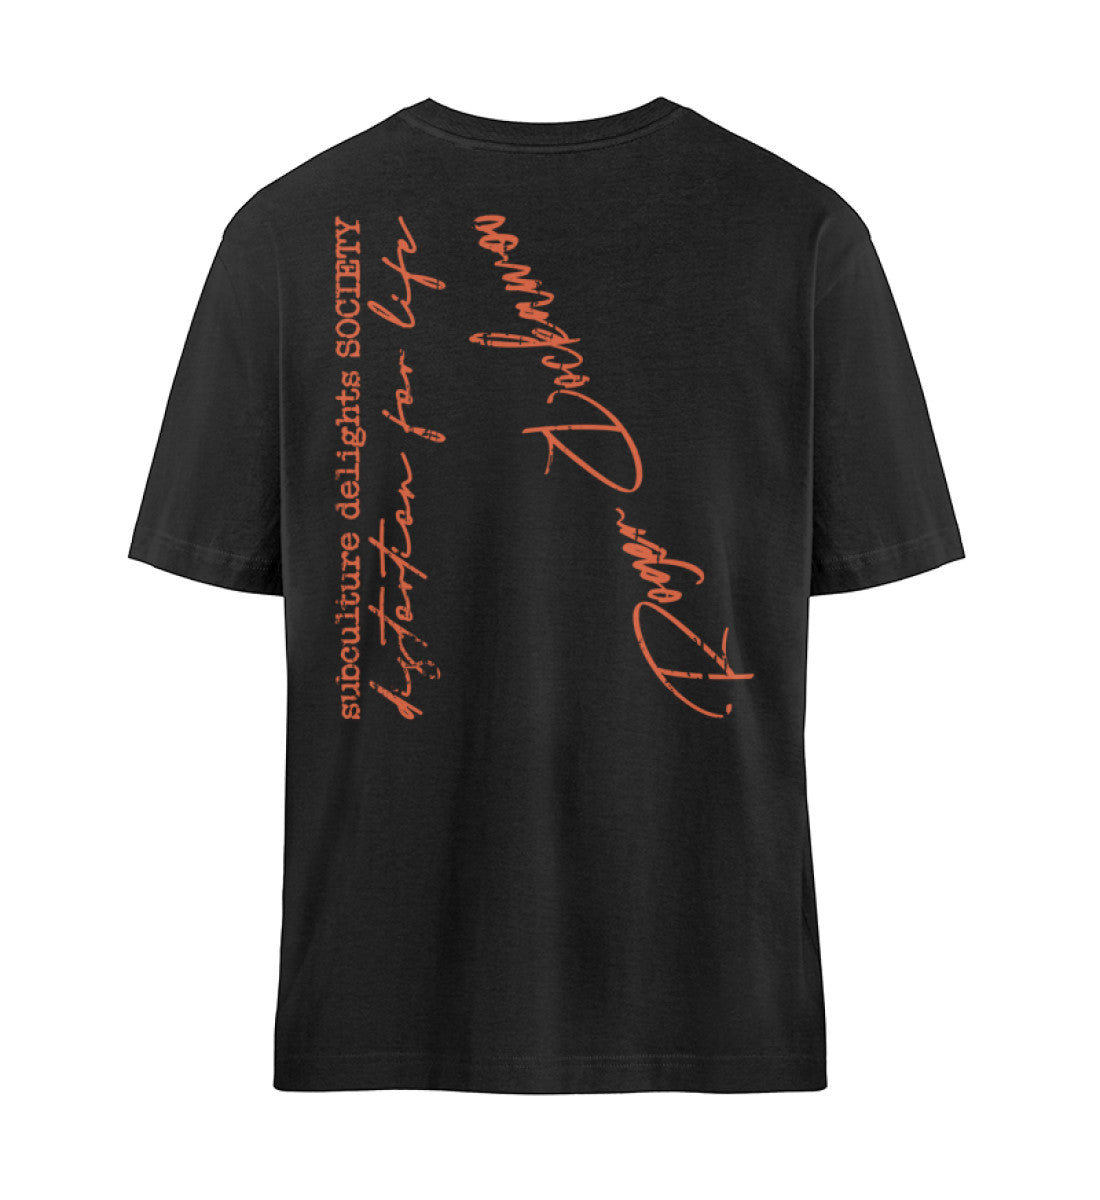 Schwarzes T-Shirt Unisex Relaxed Fit für Frauen und Männer bedruckt mit dem Design der Roger Rockawoo Kollektion E-Gitarren Single Coil Set Up